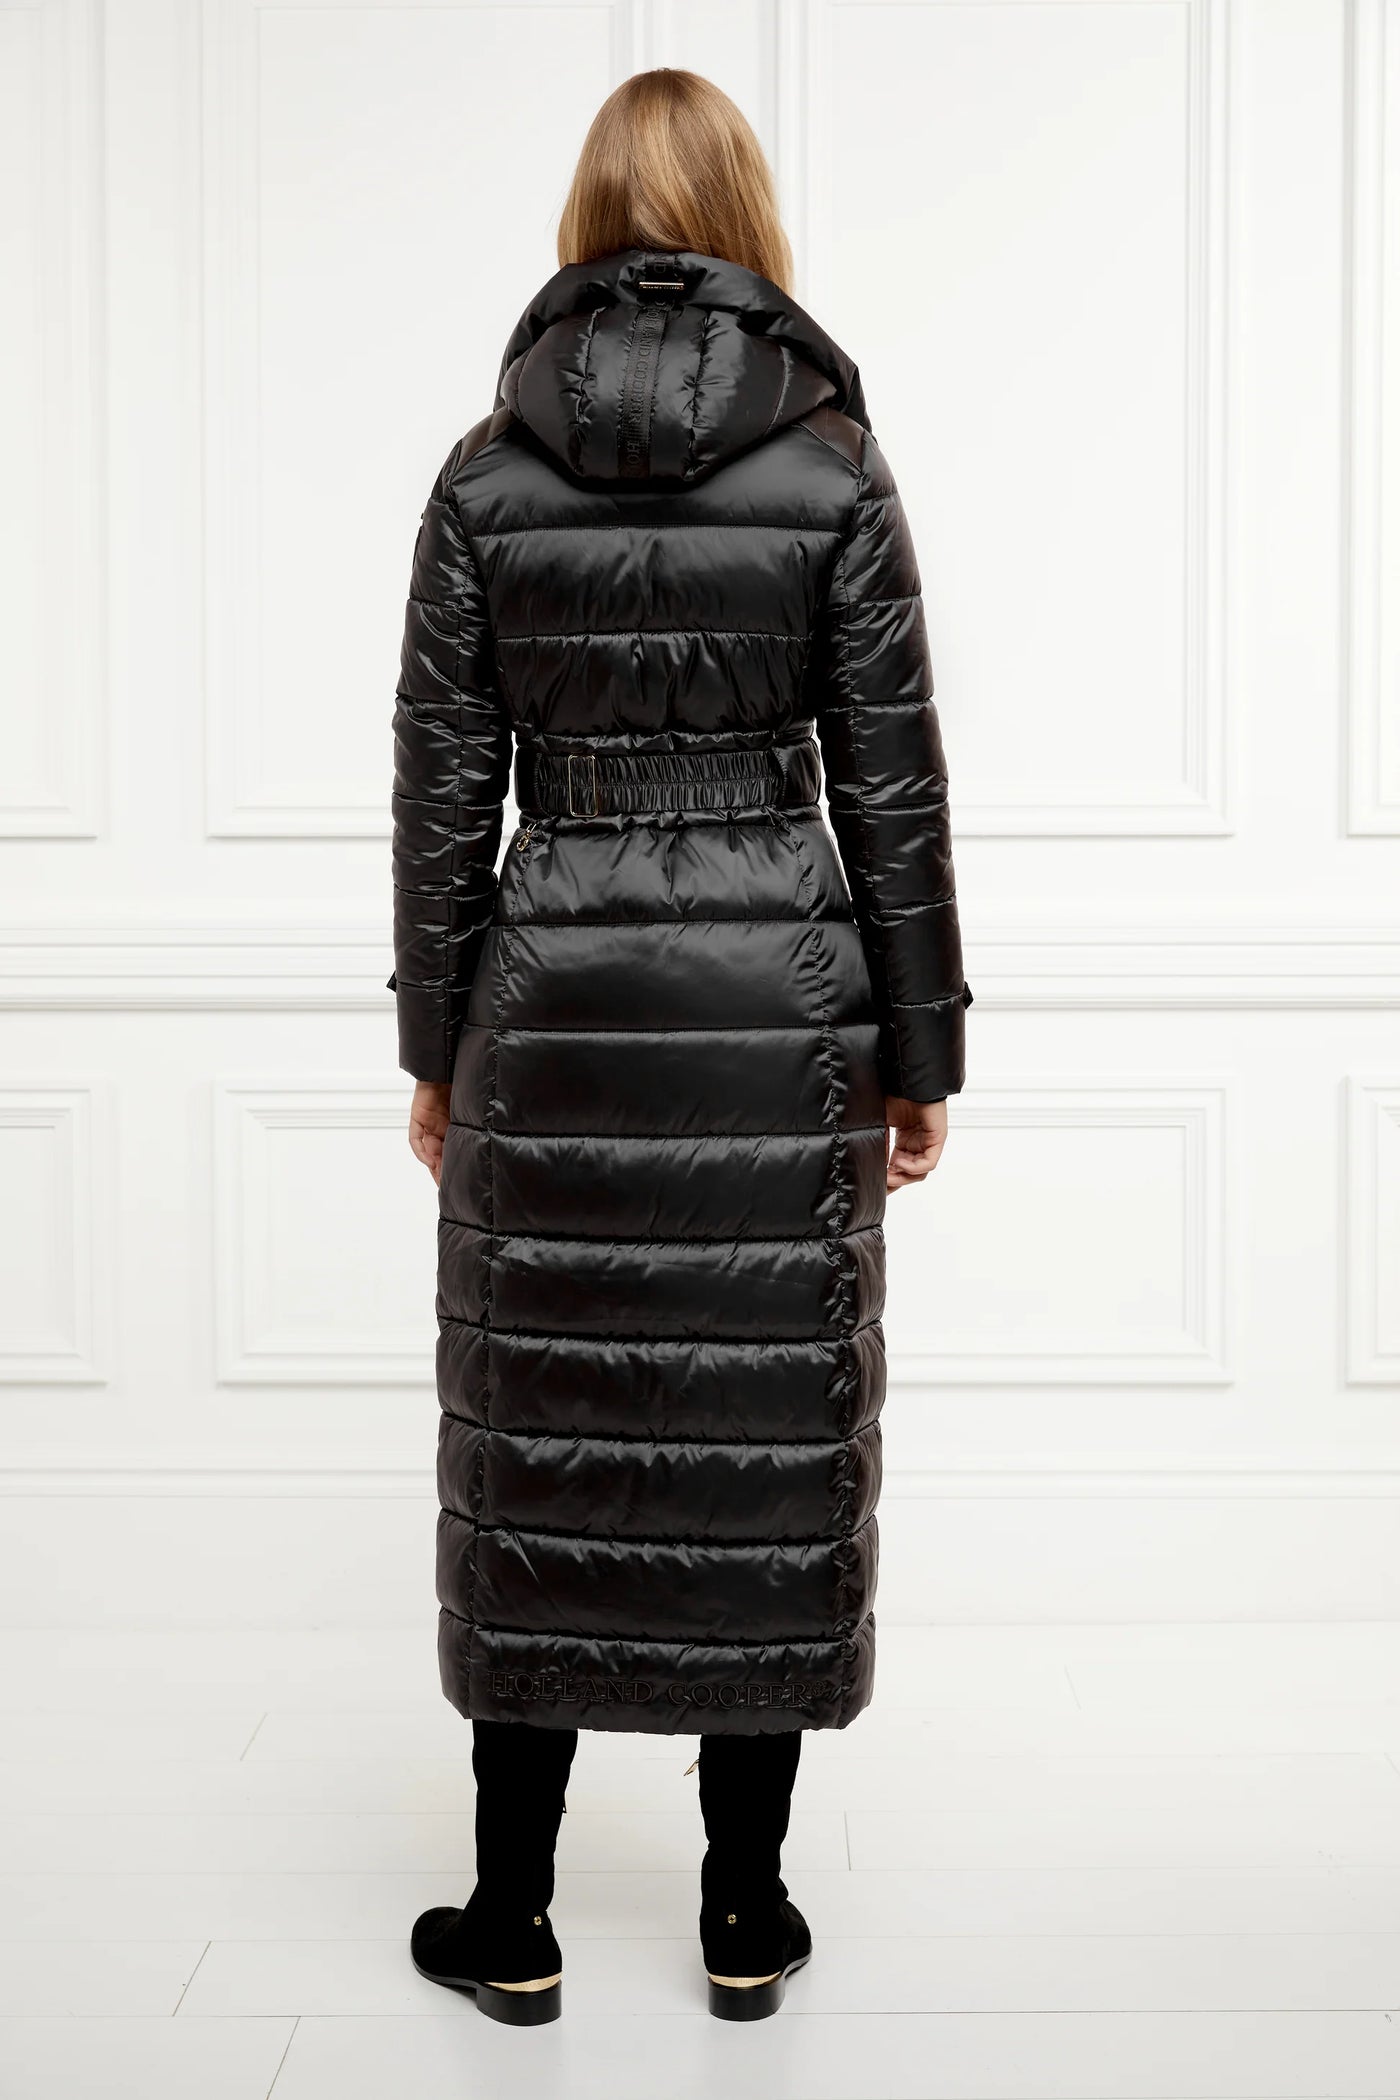 Holland Cooper Arosa Quilted Longline Ladies Coat in Black Model Back